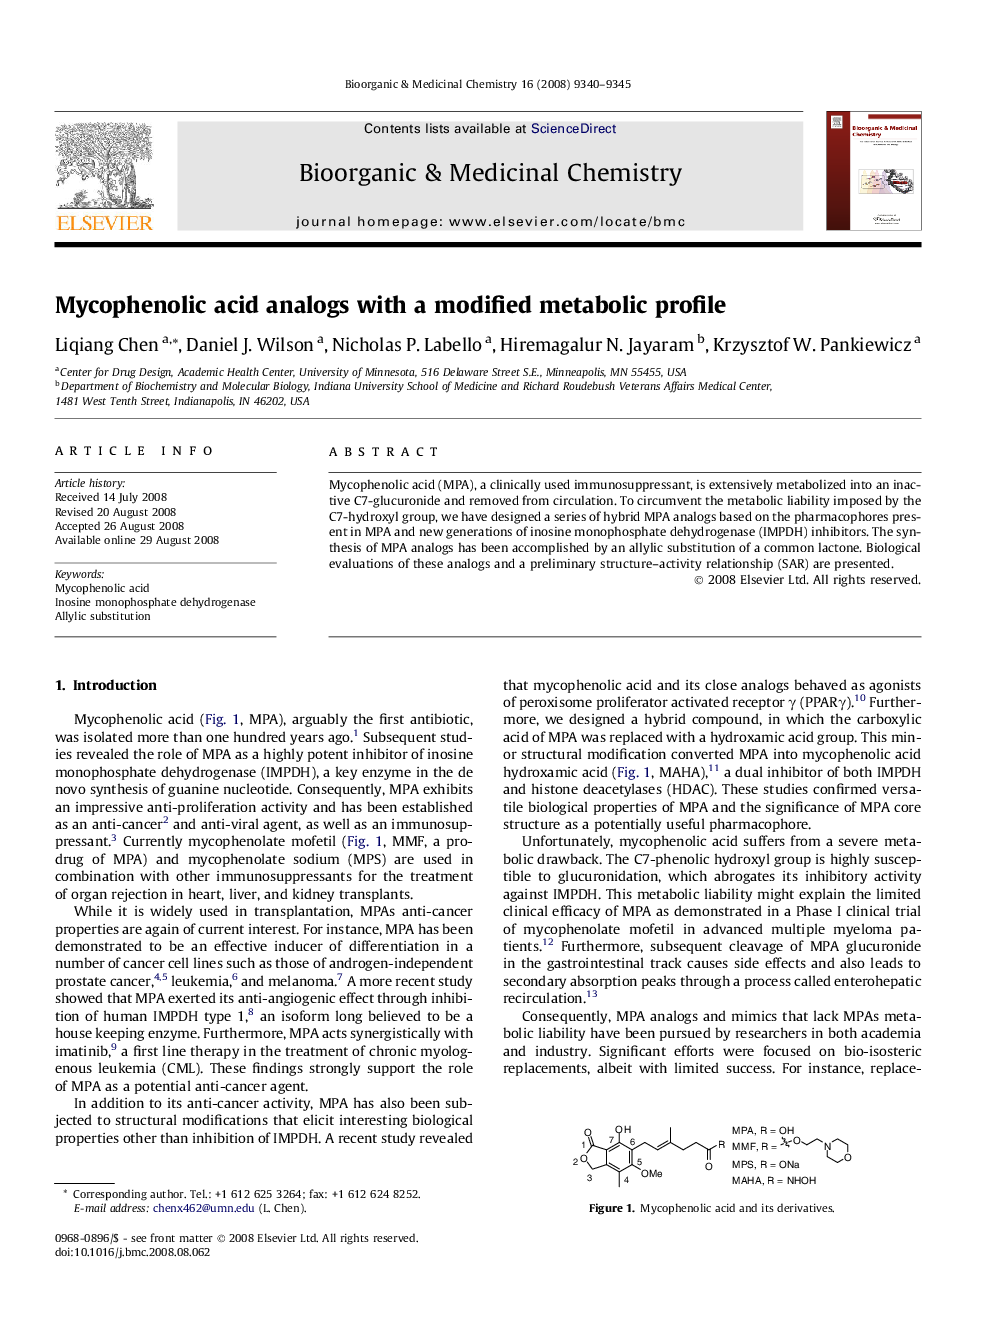 Mycophenolic acid analogs with a modified metabolic profile